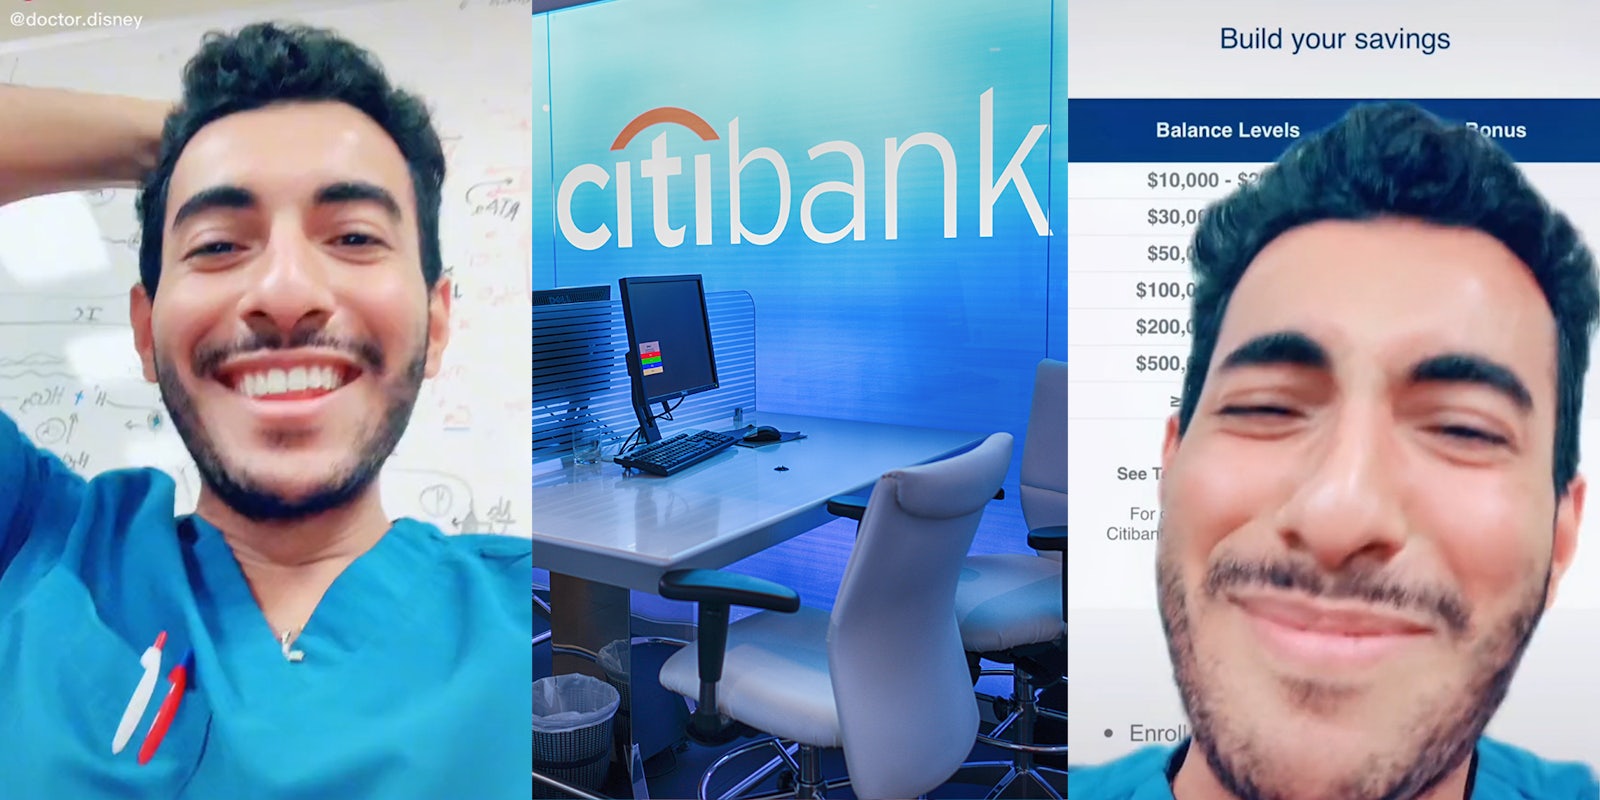 man in scrubs smiling (l) Citibank logo on window (c) man laughing in front of Citibank Bonus levels mailer (r)